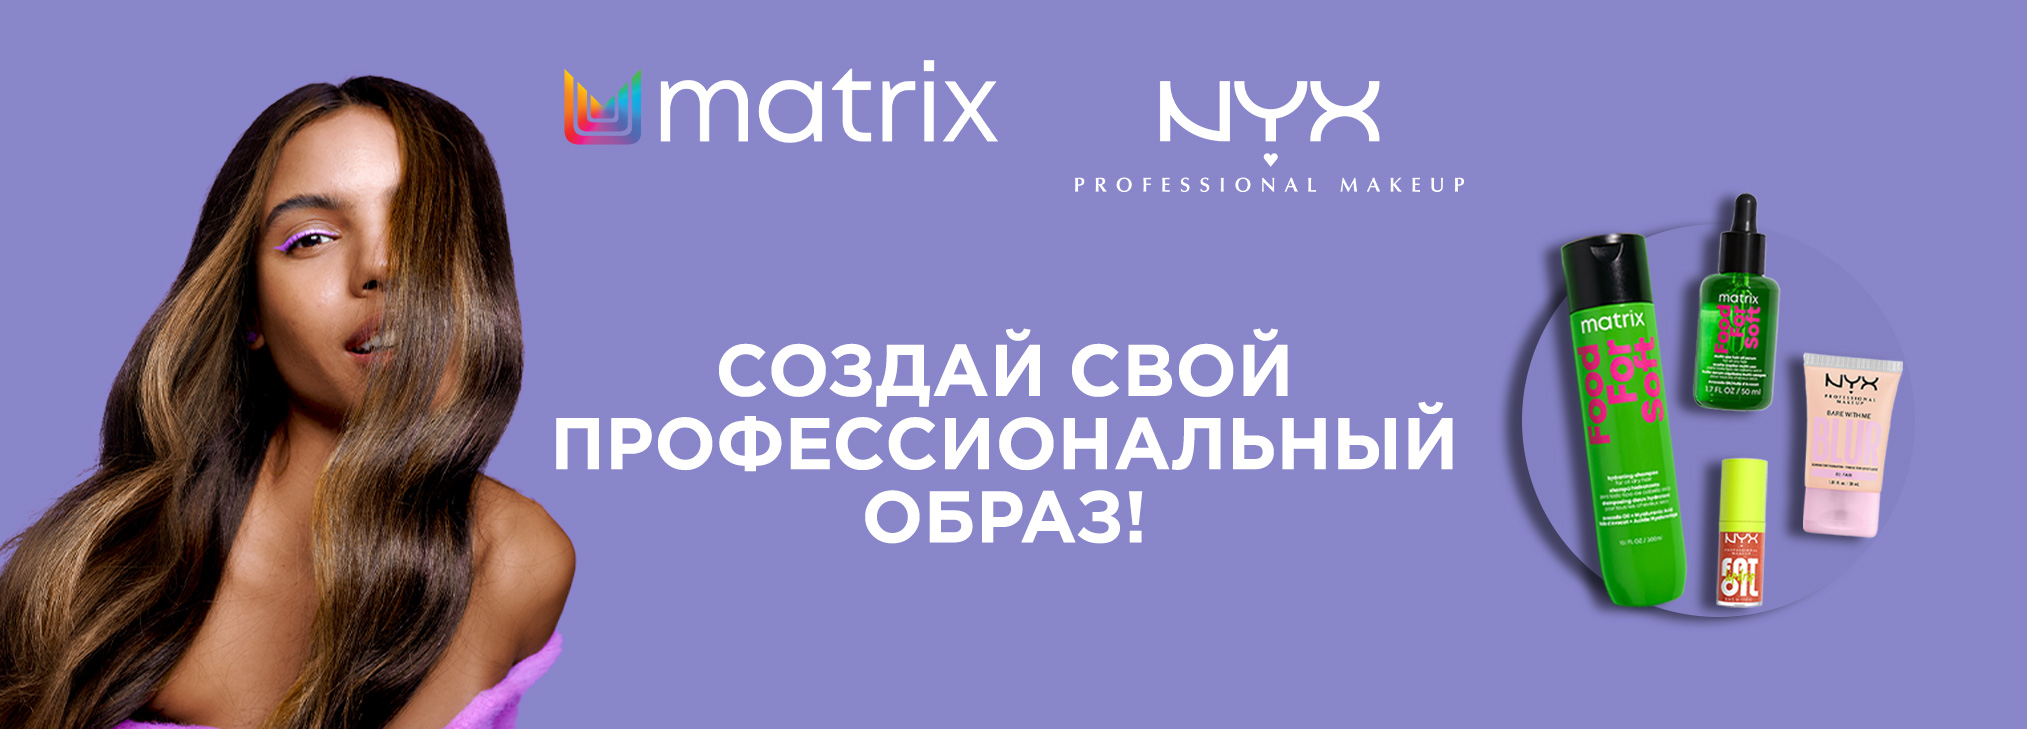 Matrix Nyx